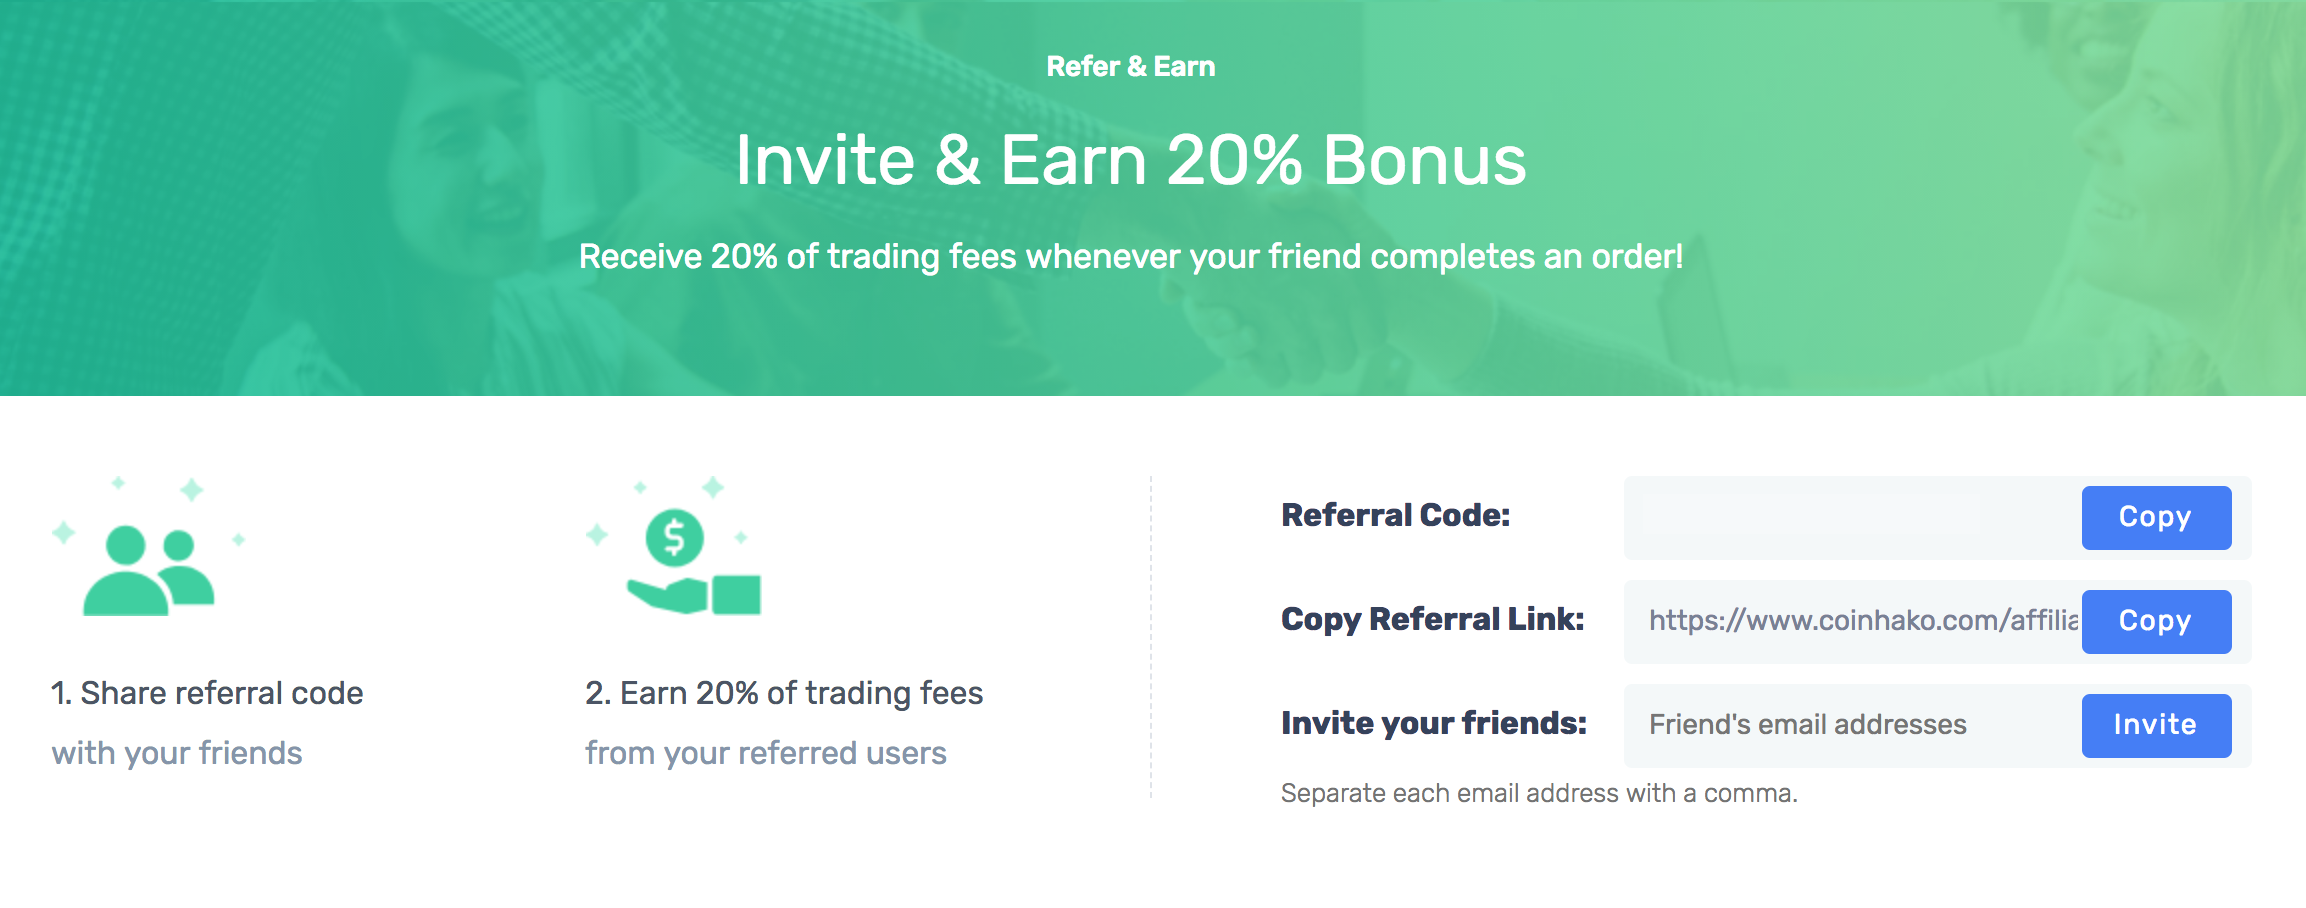 Refer and earn a 20% bonus at Coinhako!